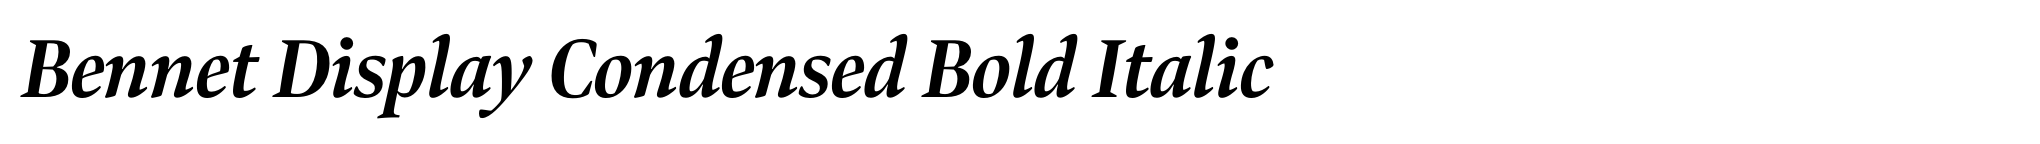 Bennet Display Condensed Bold Italic image